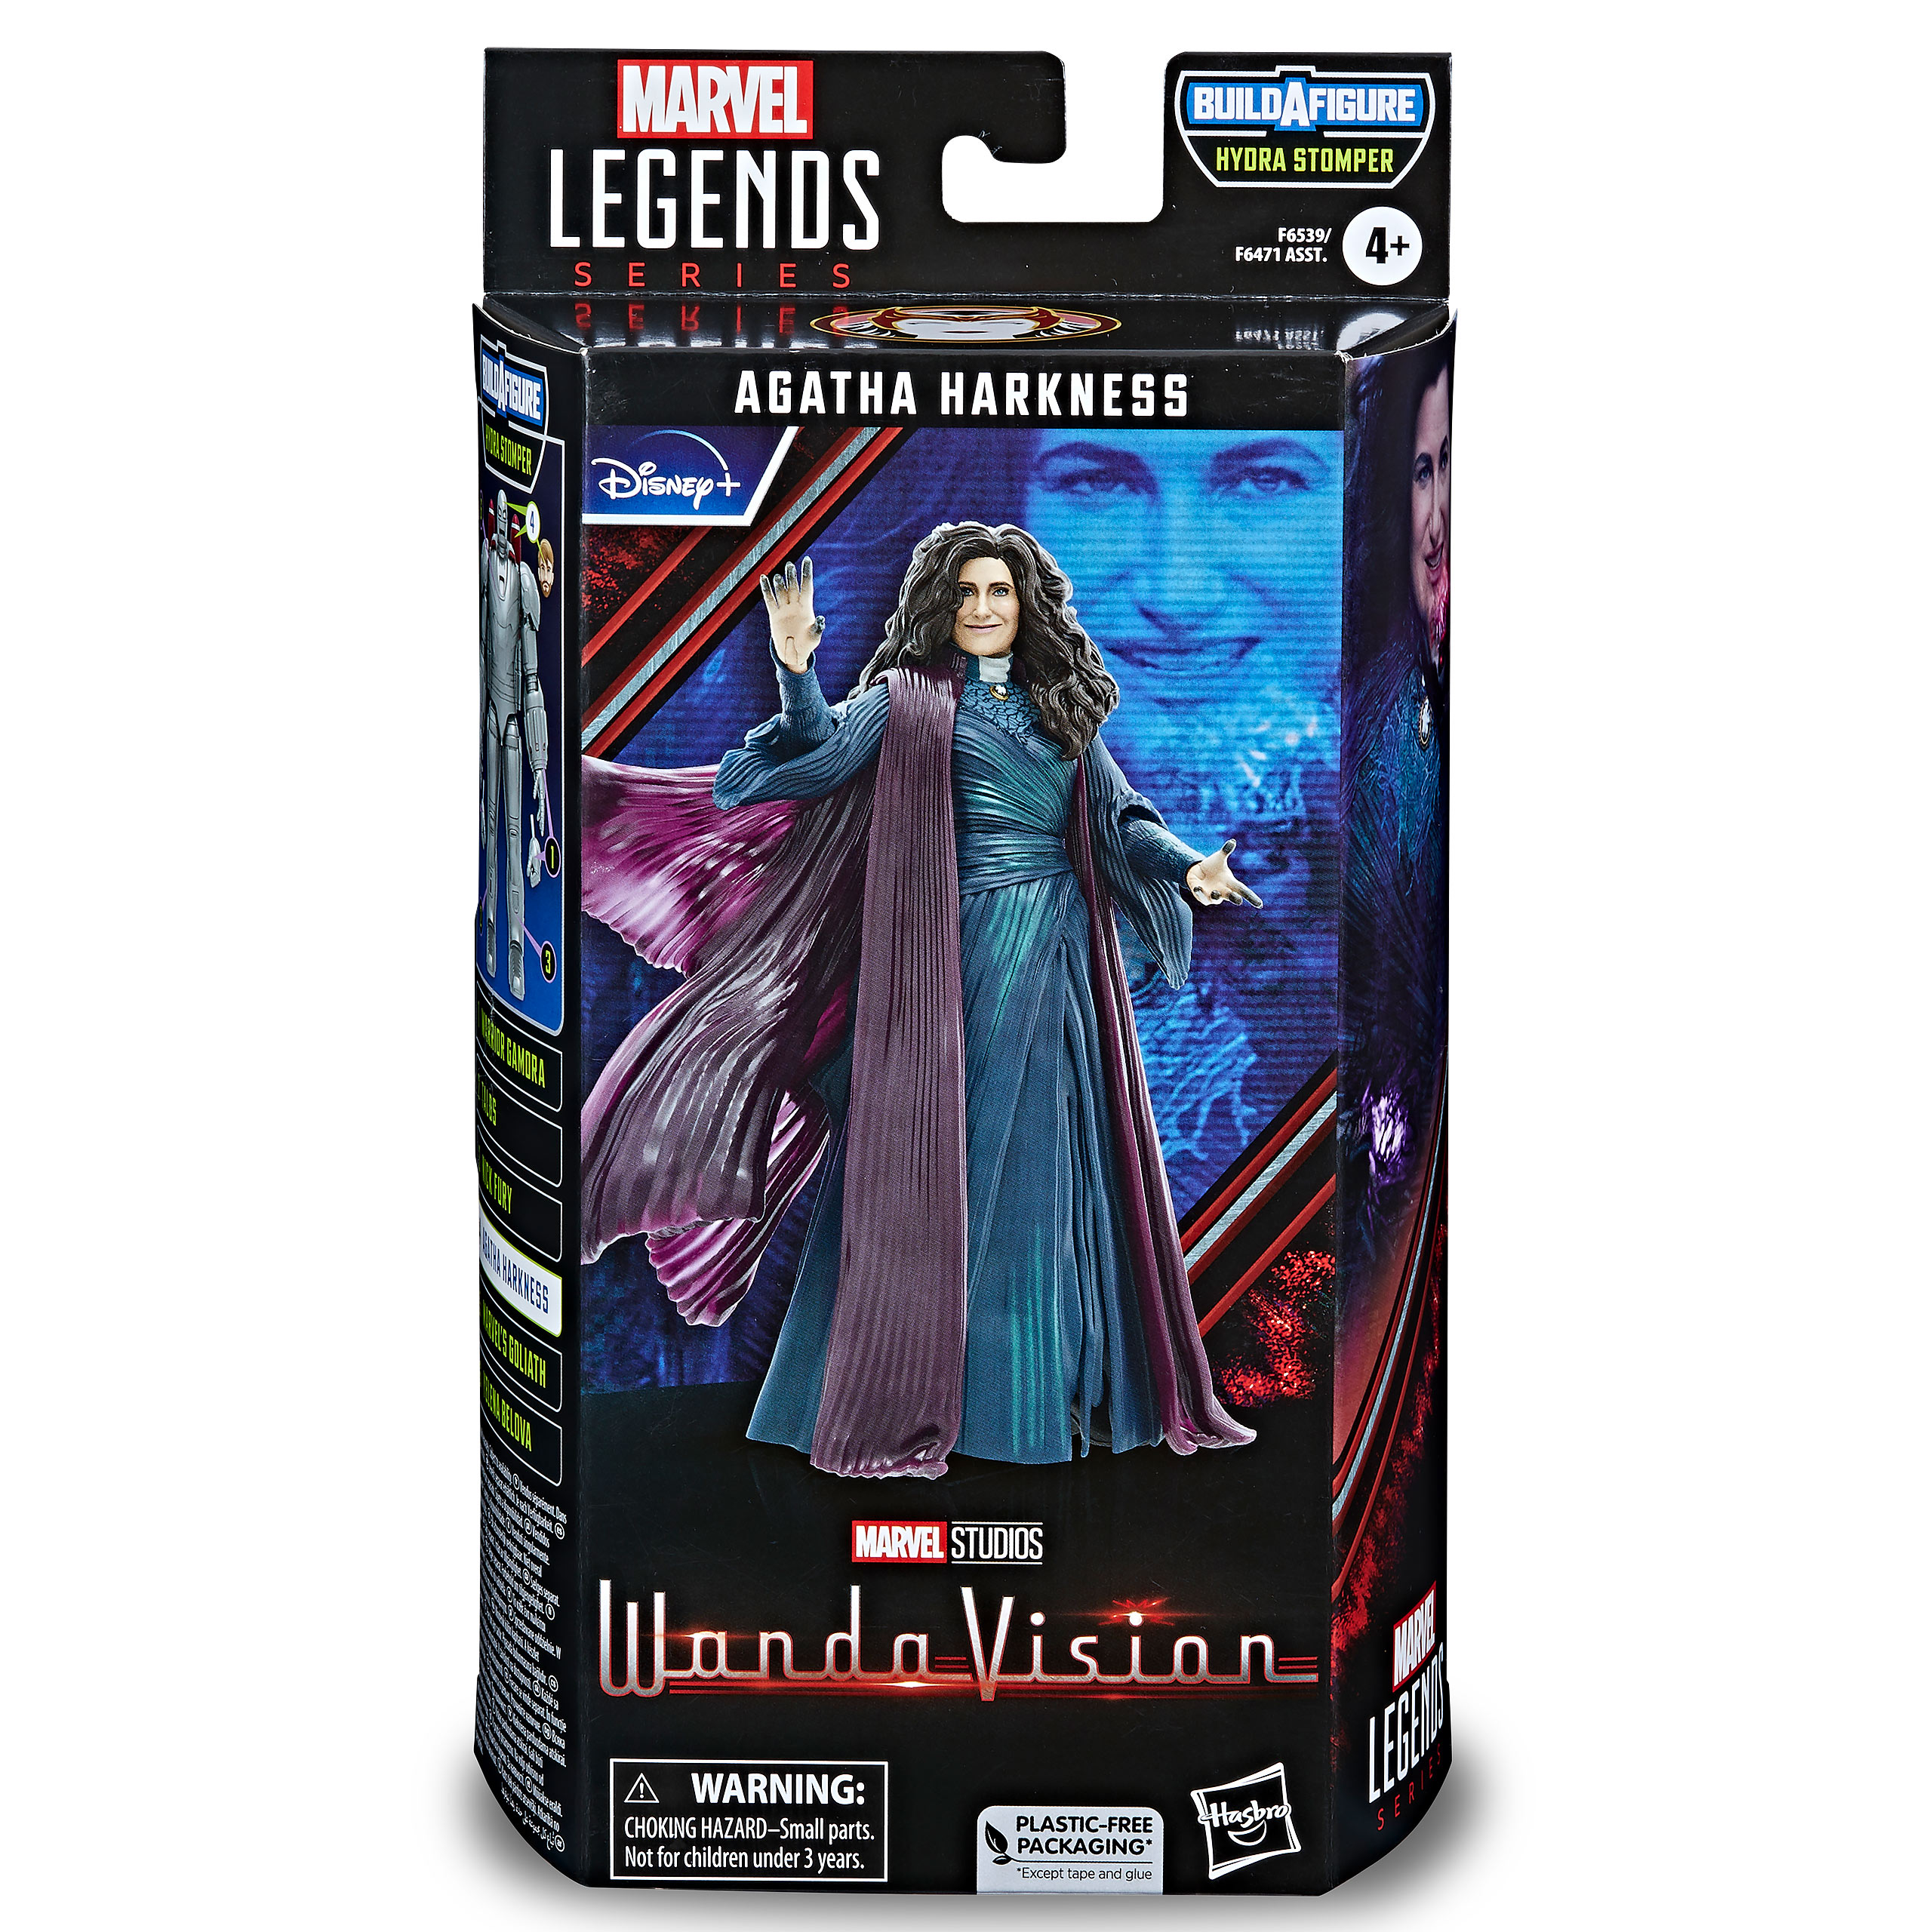 Wanda Vision - Agatha Harkness Marvel Legends Series Actiefiguur